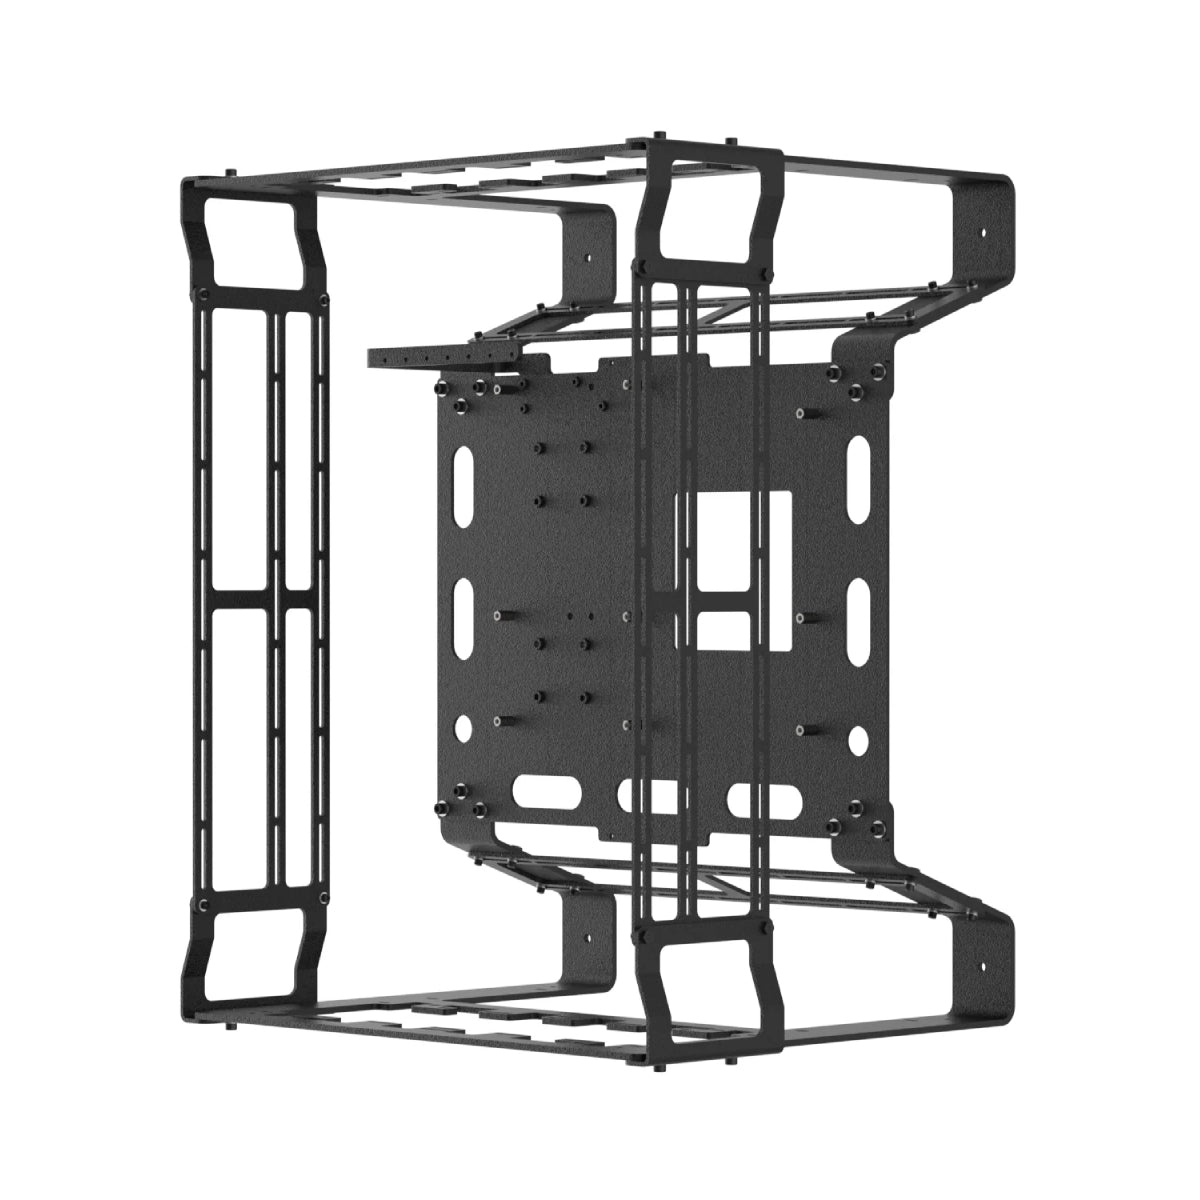 Yuel Beast Atlass II ATX Gaming Tower Case - Black - صندوق - Store 974 | ستور ٩٧٤